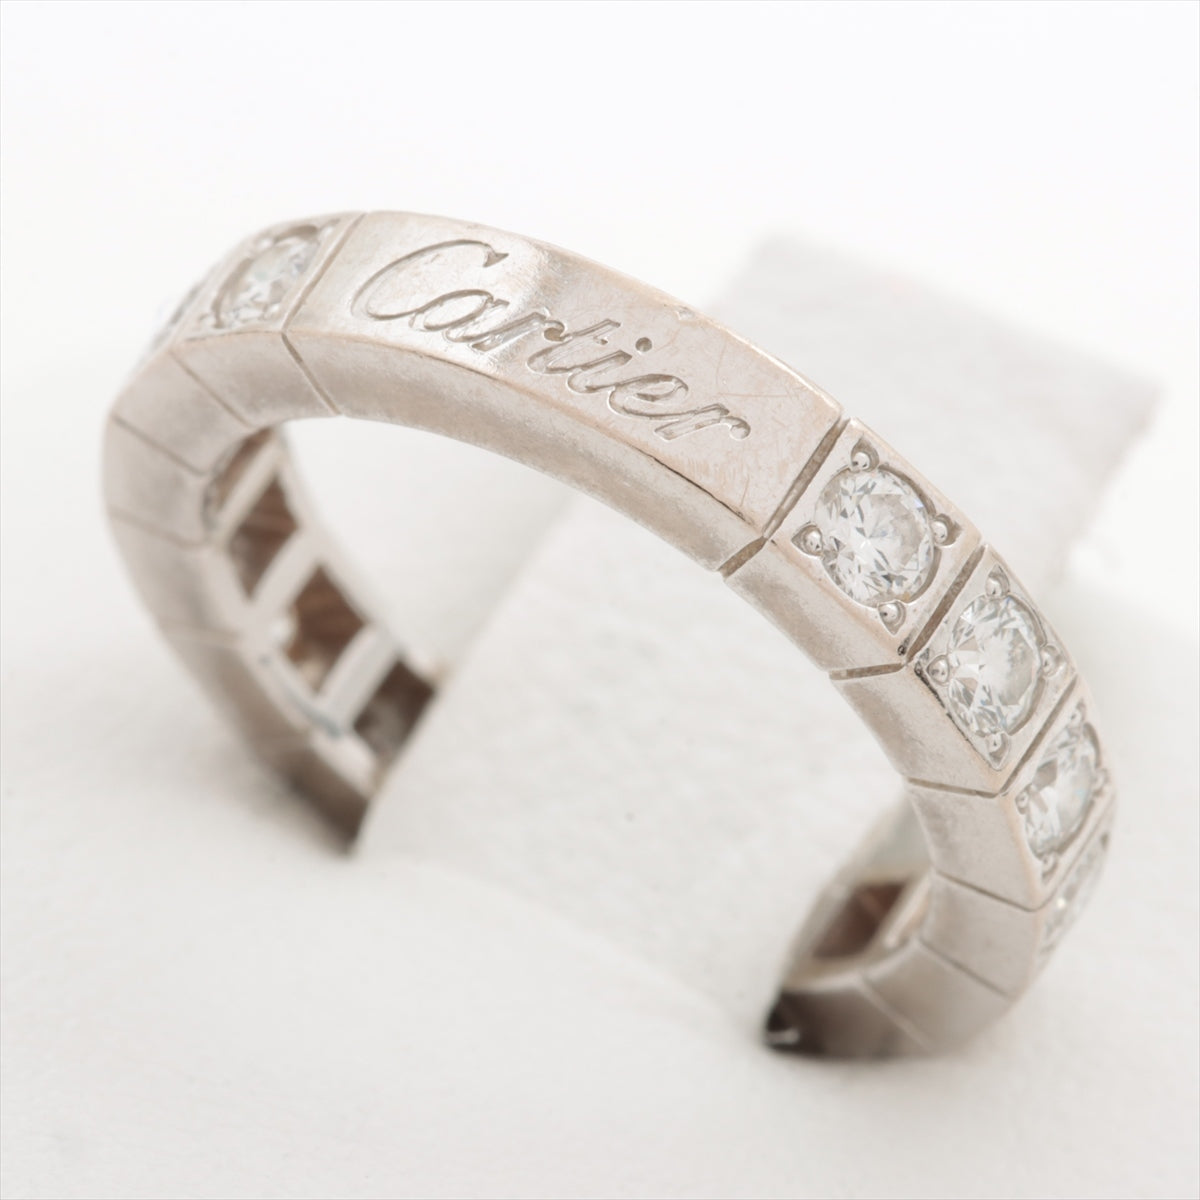 Cartier Raniere full diamond rings 750(WG) 4.1g 45